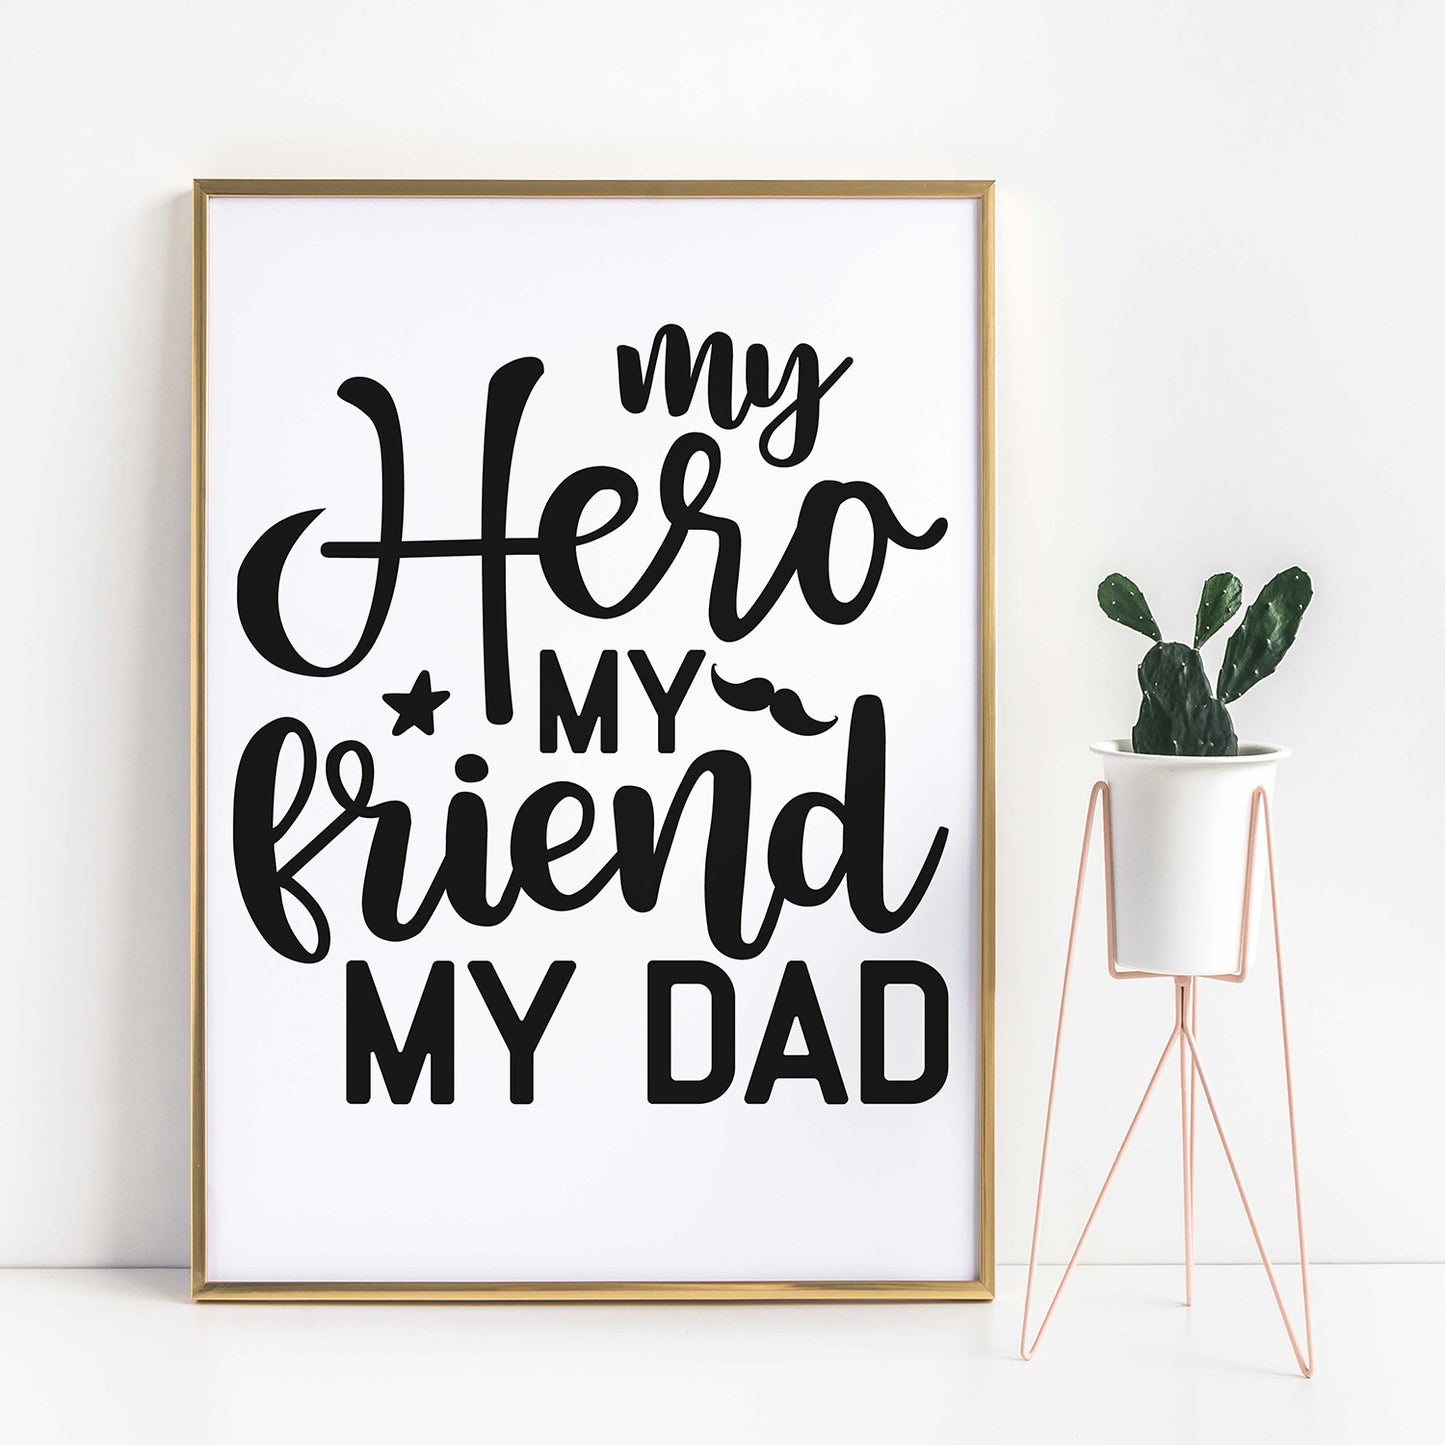 "My Hero My Friend My Dad" Graphic